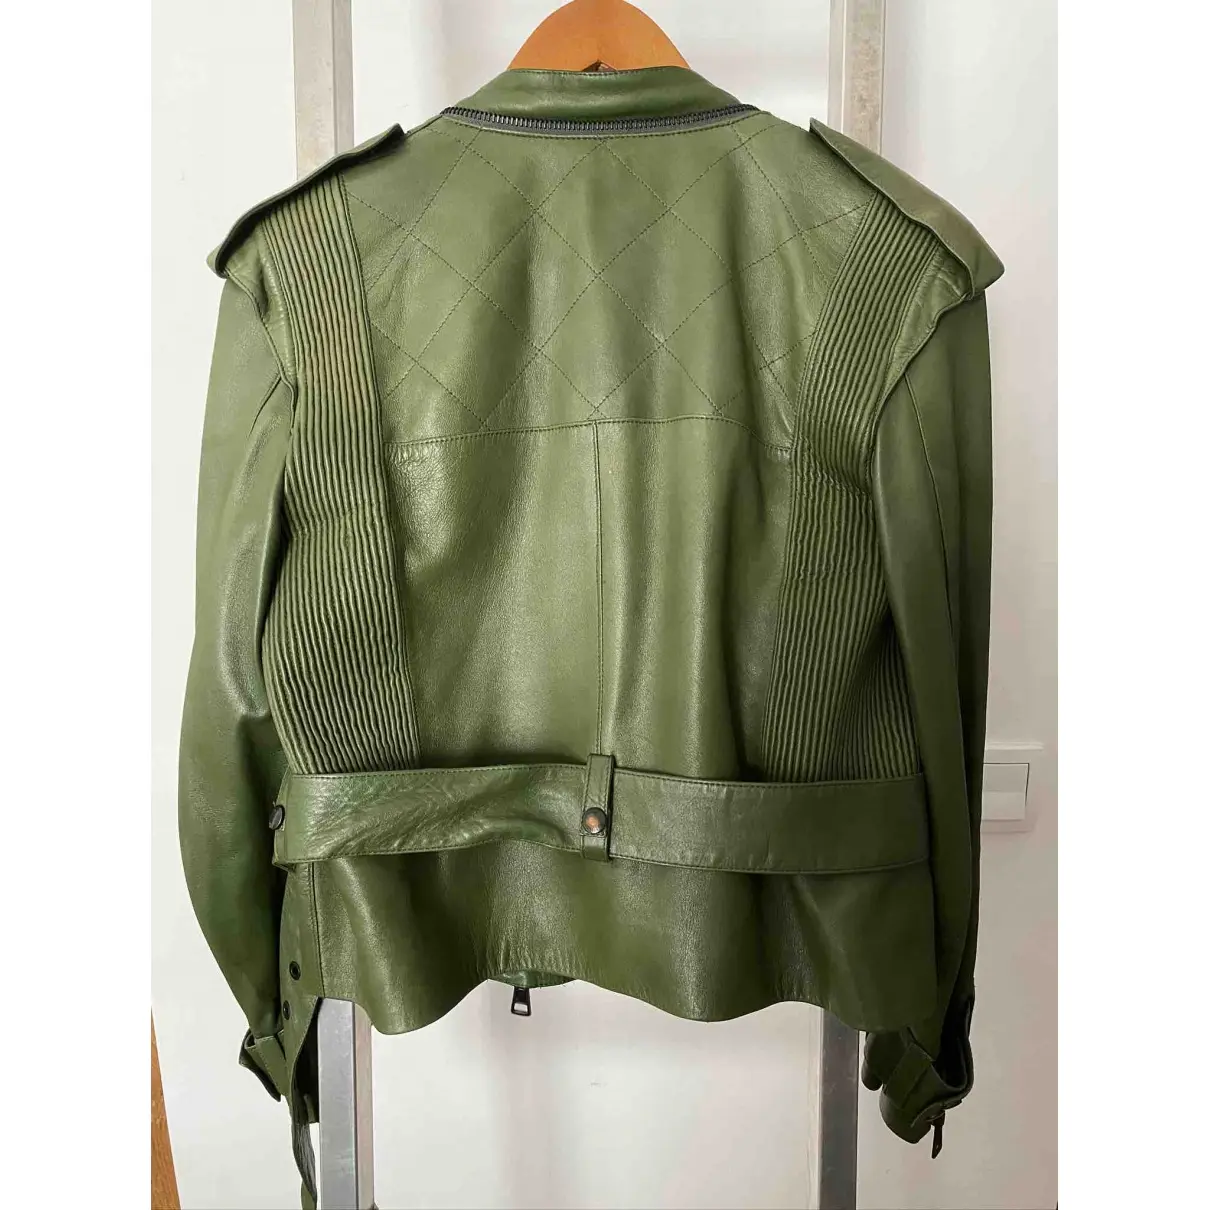 Buy Chloé Leather jacket online